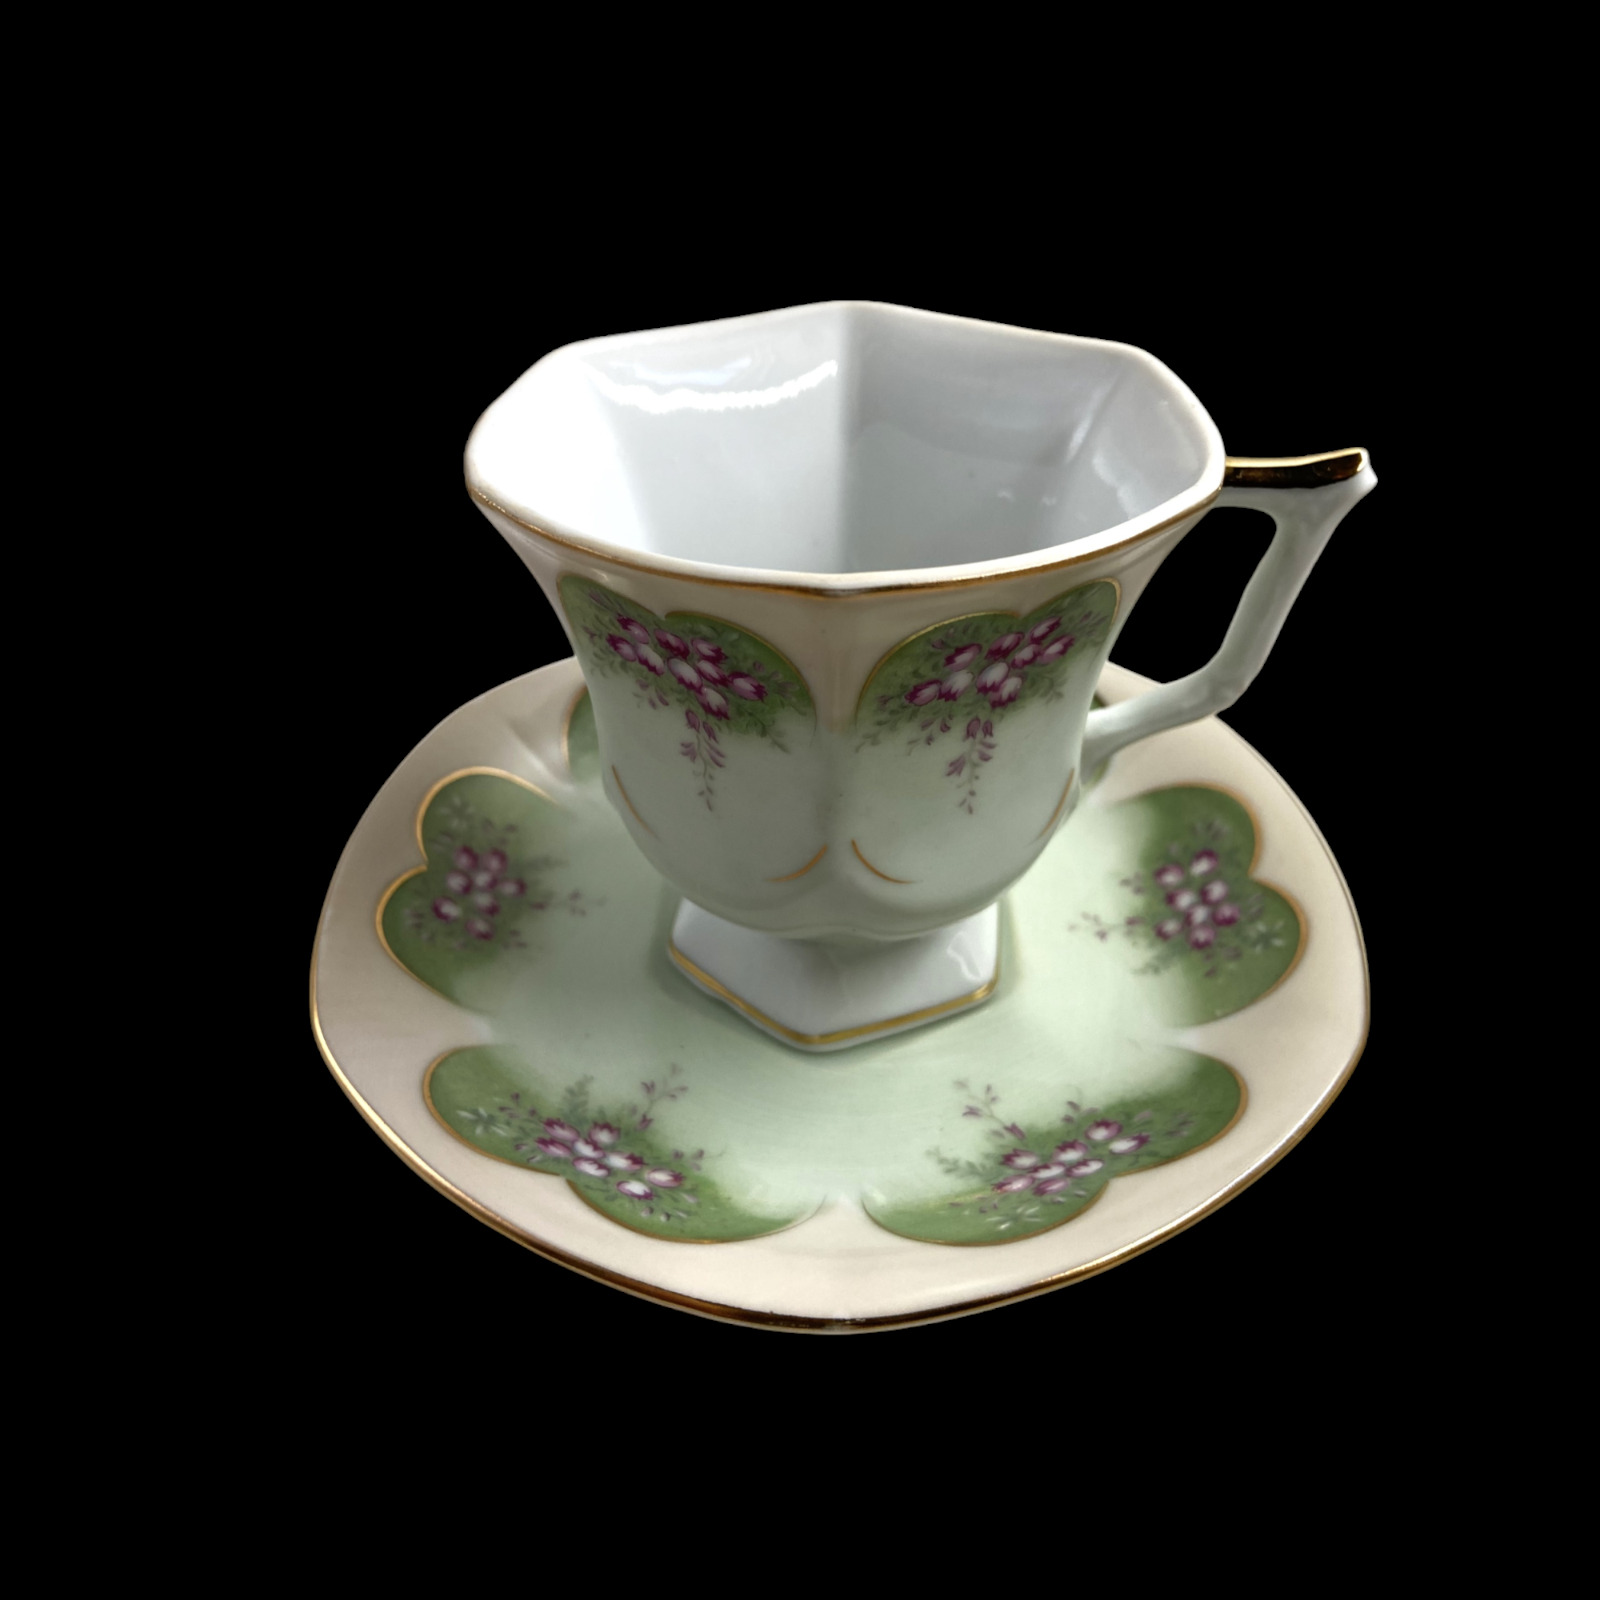 Lefton China Vintage Teacup & Saucer Handpainted